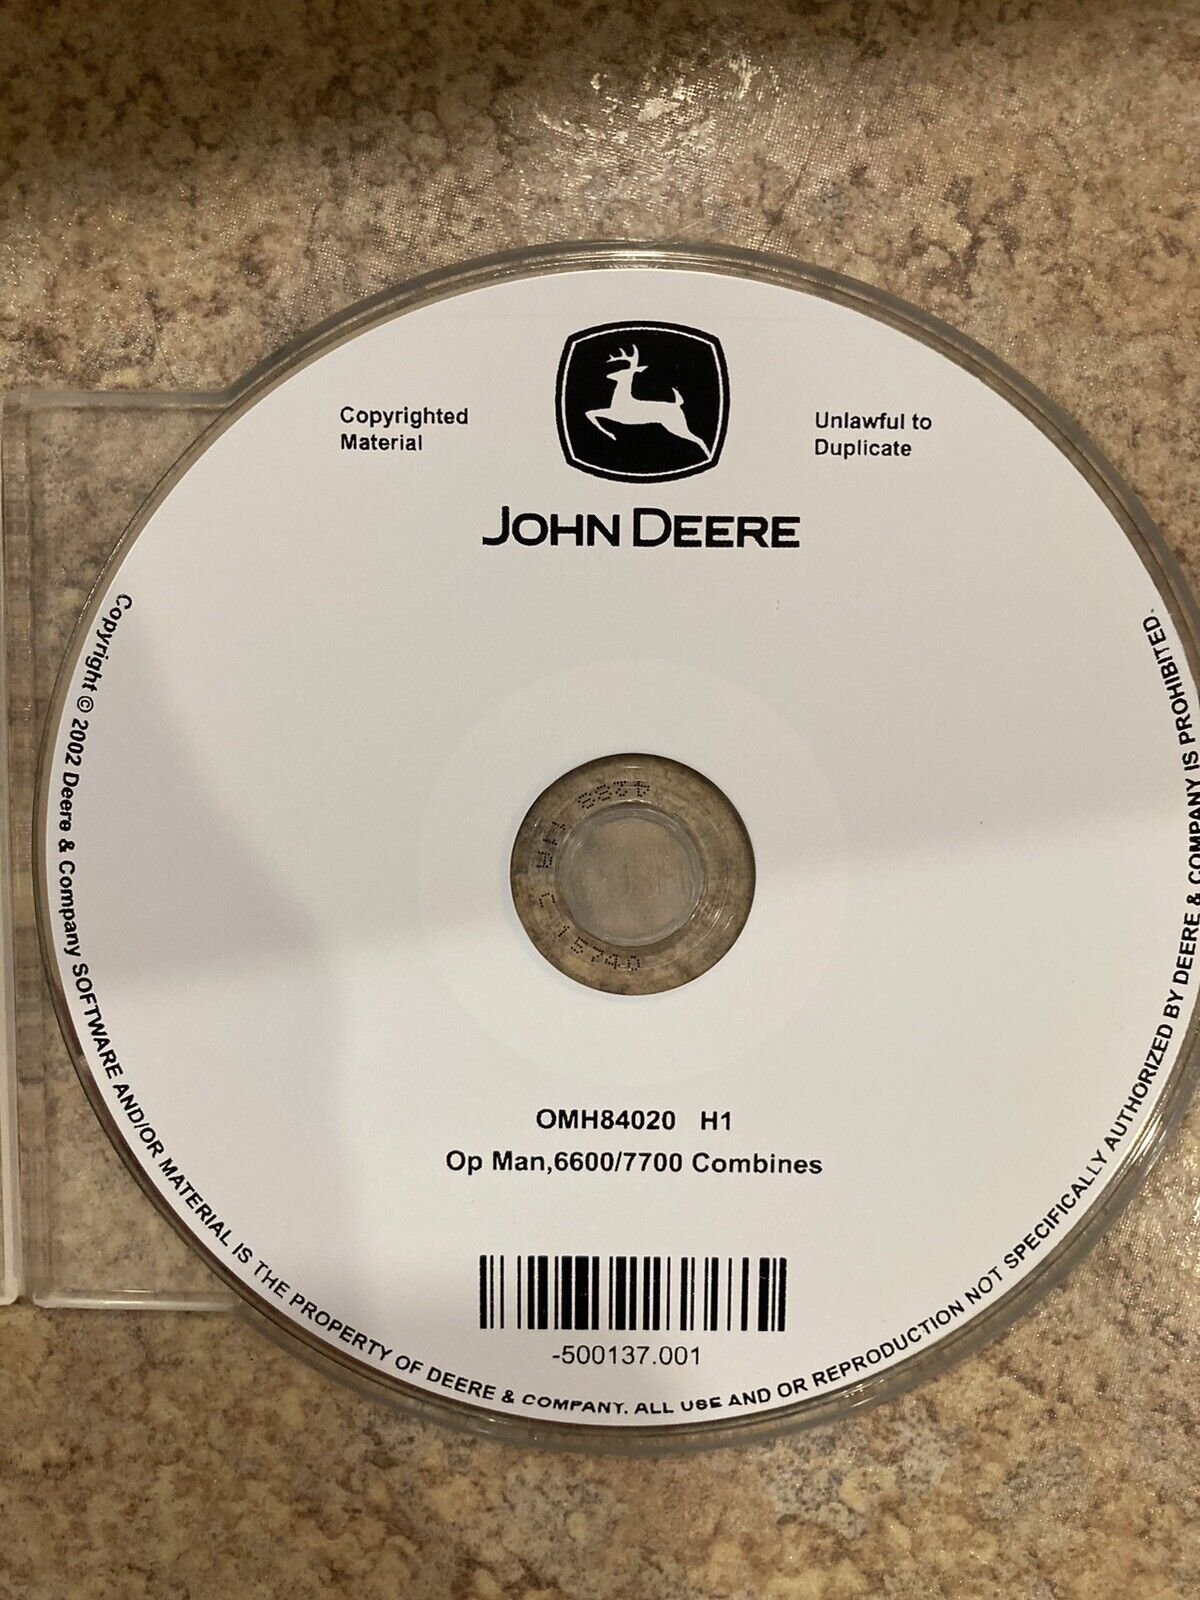 John Deere 6600/7700 Combine Operator’s Manual OMH84020 H1 on CD